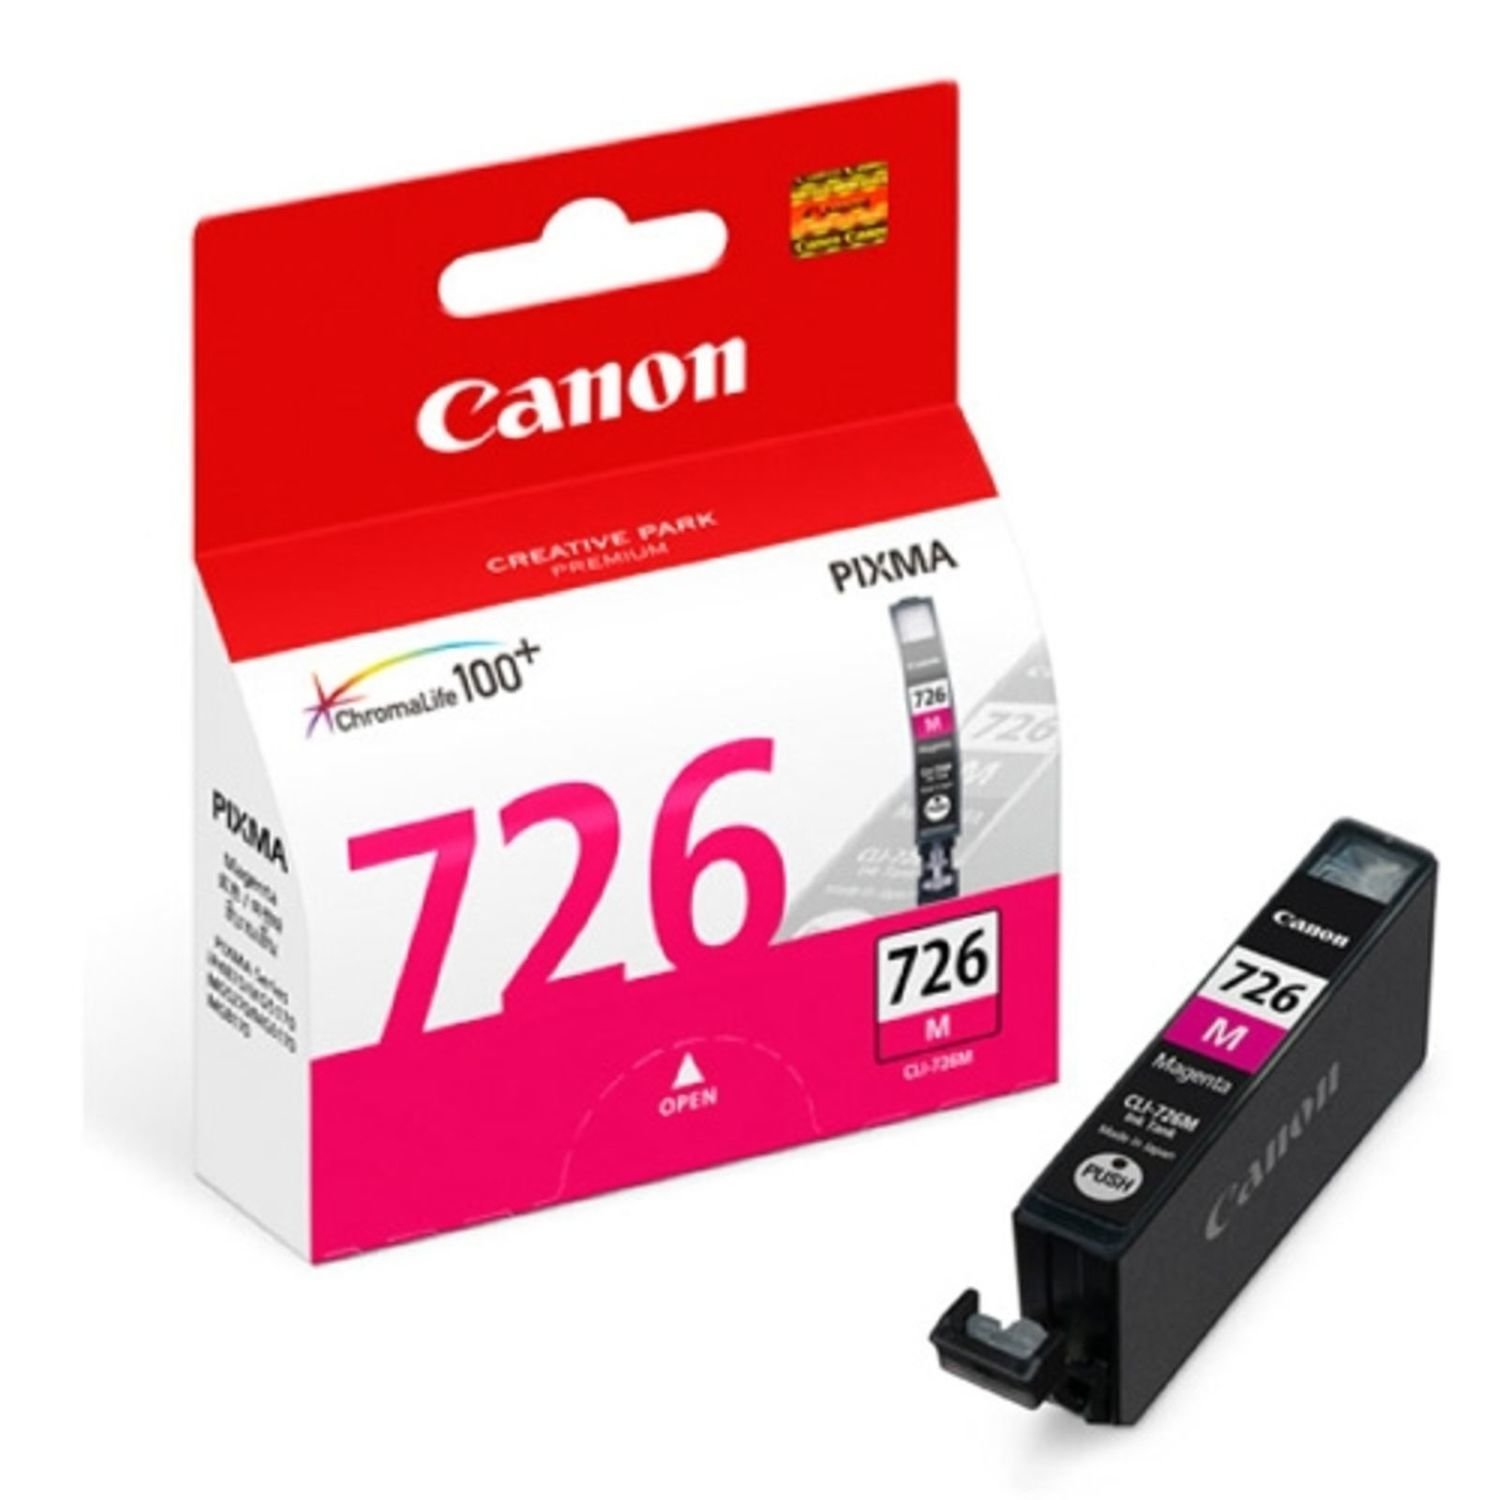 Canon Pixma 726 Ink Cartridge, Magenta